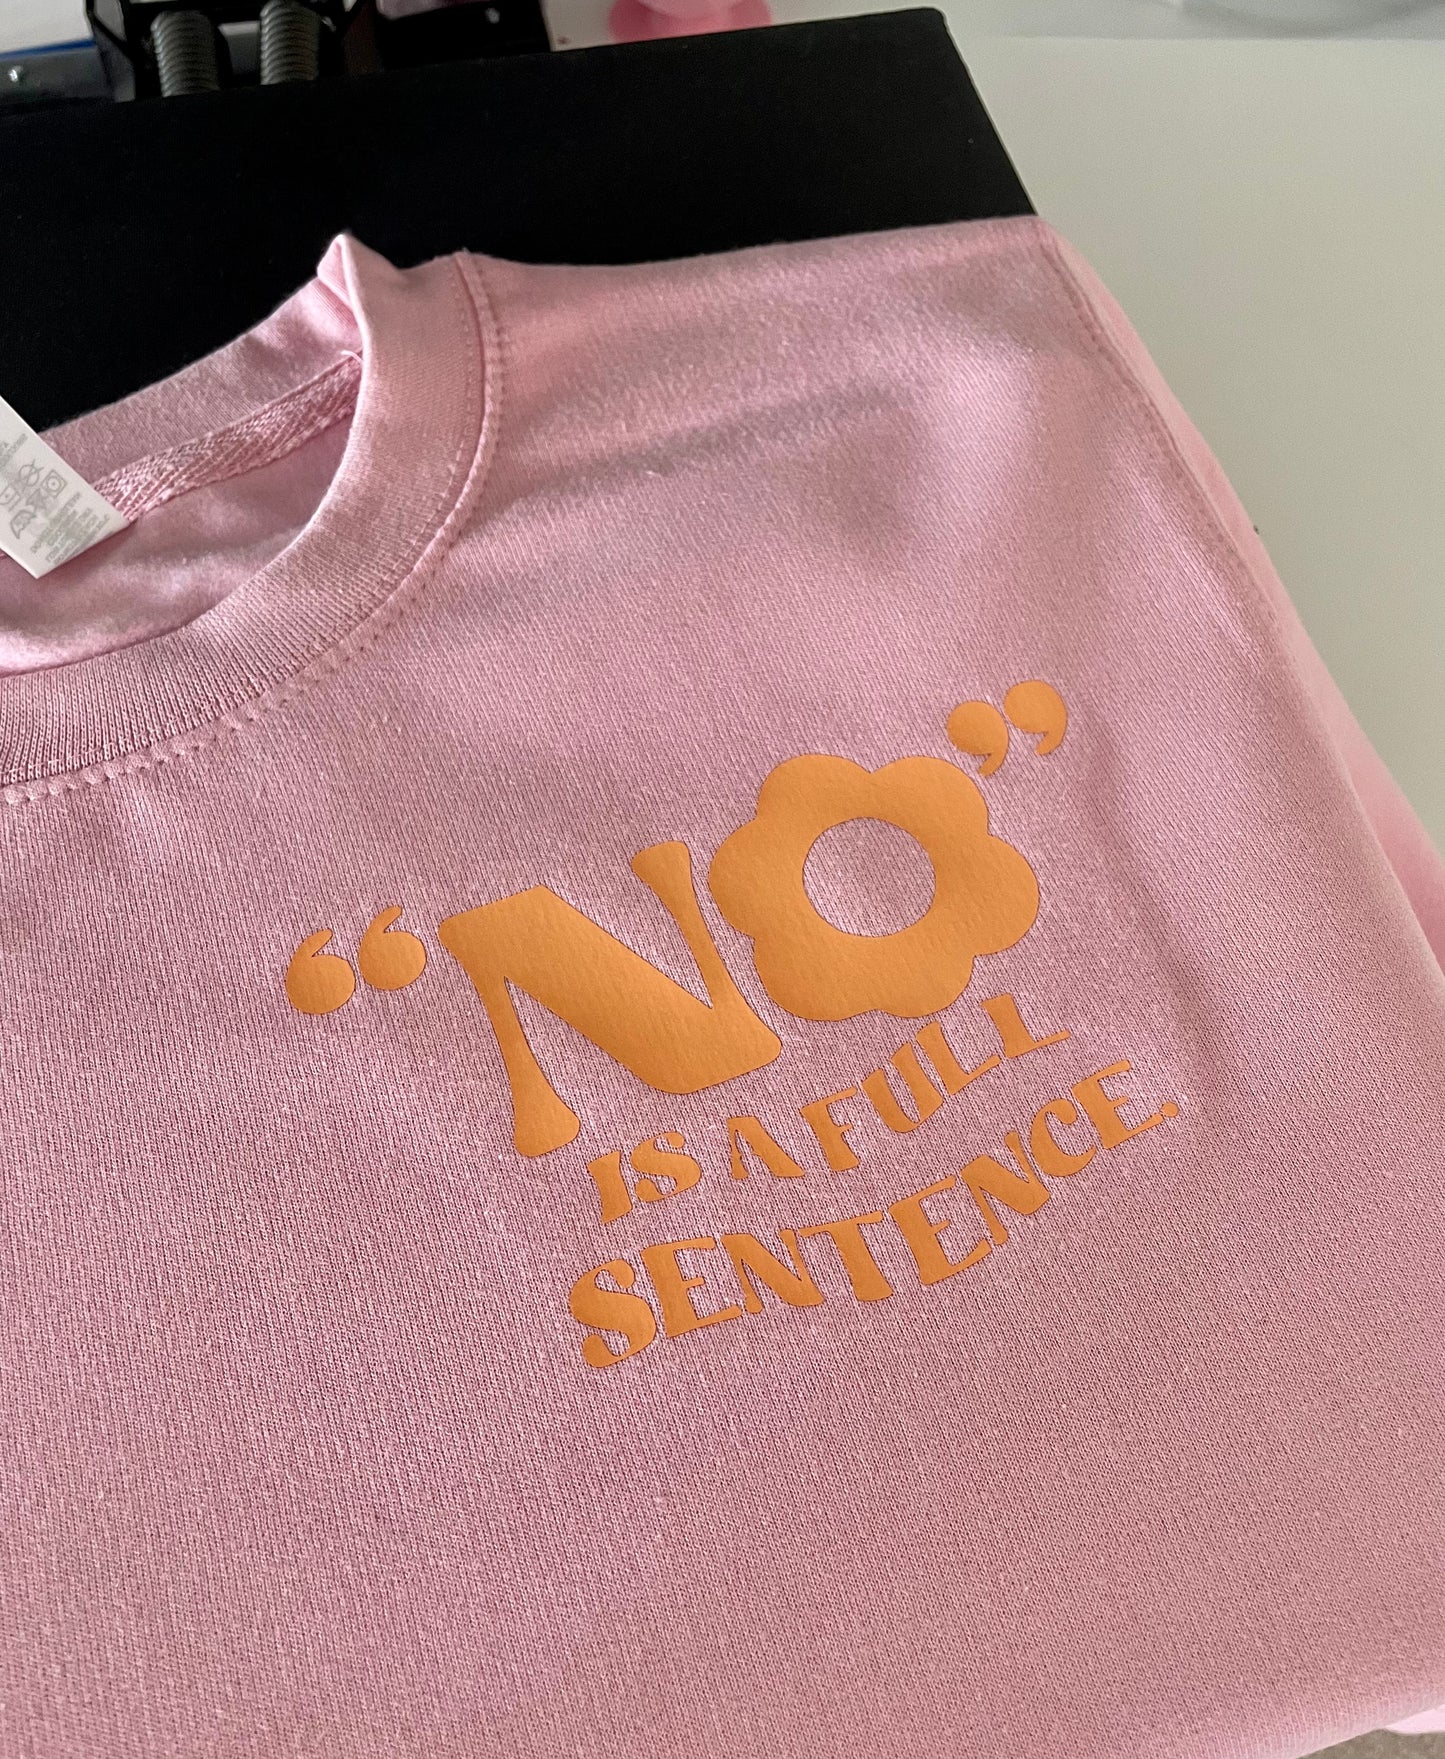 No can also sound like Pink sweatshirt